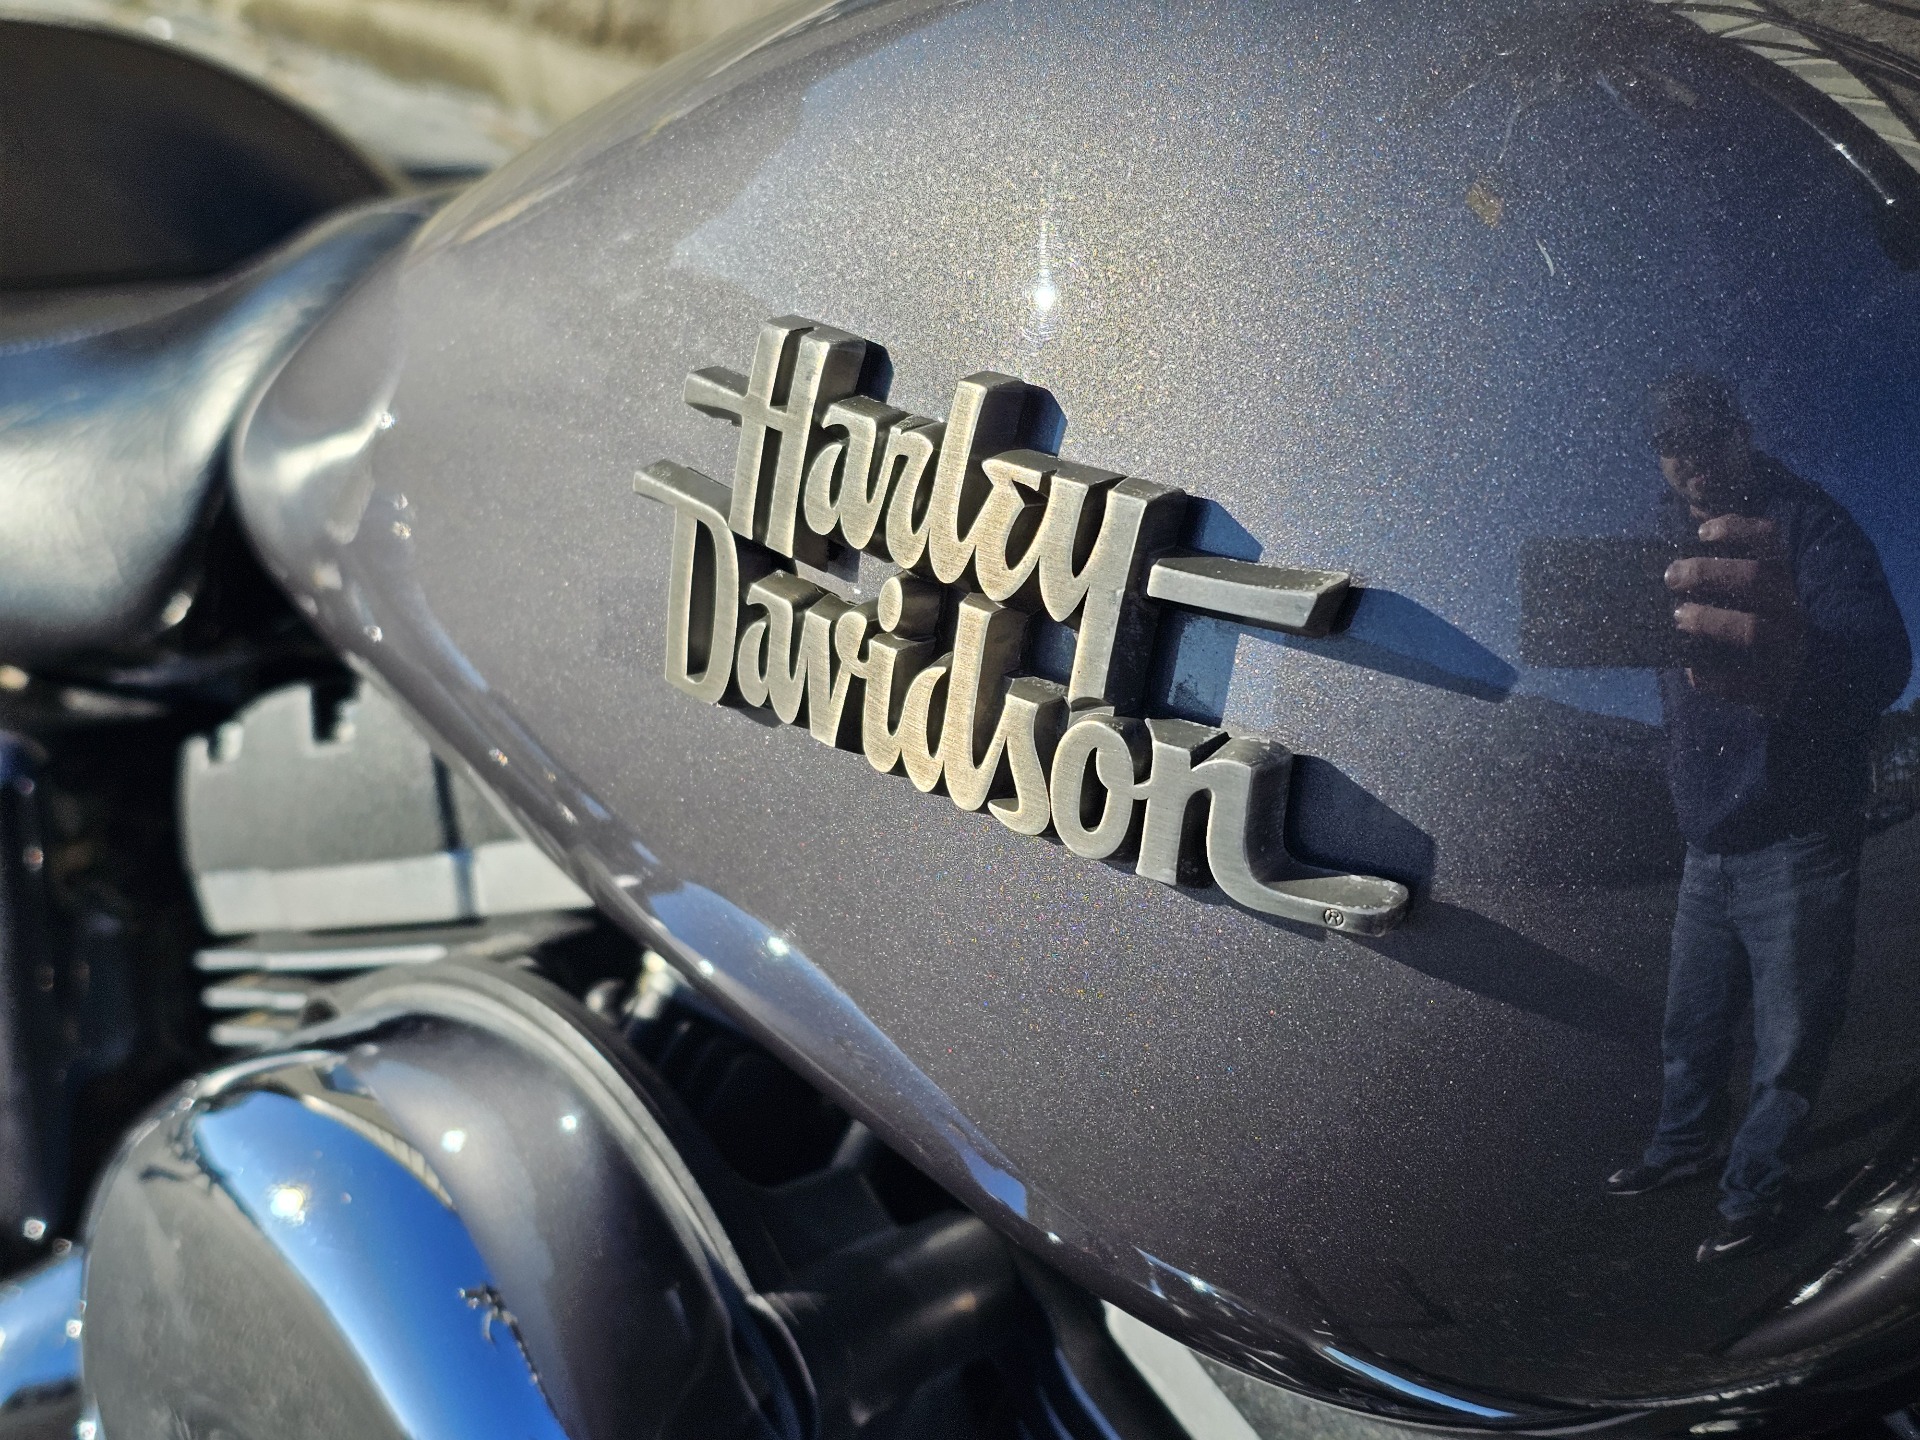 2014 Harley-Davidson Dyna® Street Bob® in Columbus, Georgia - Photo 5